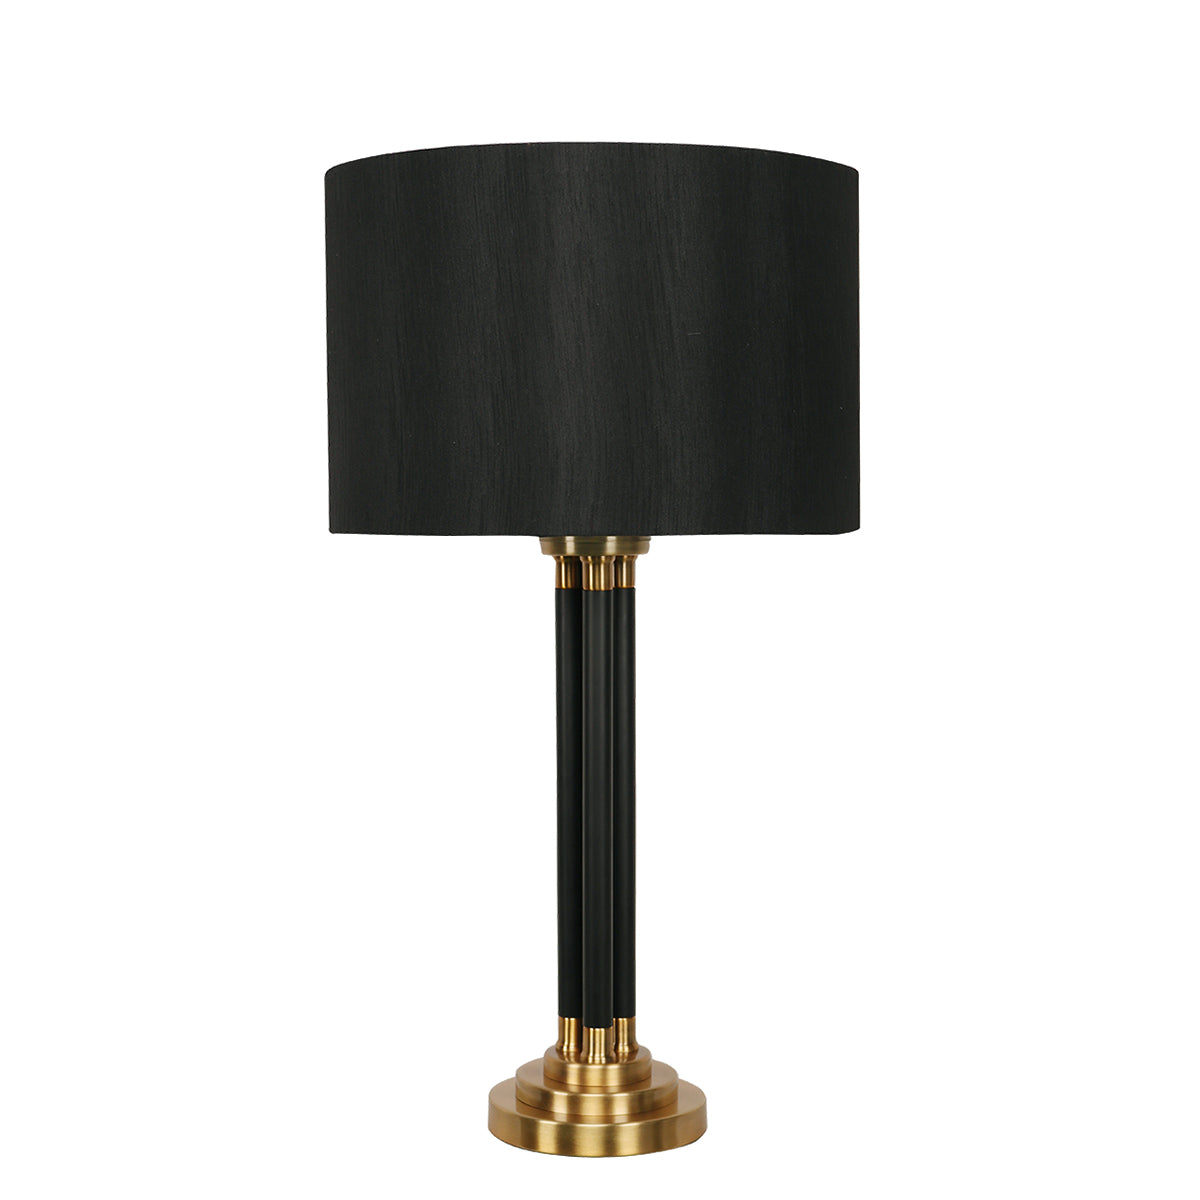 Nico 27" Table Lamp